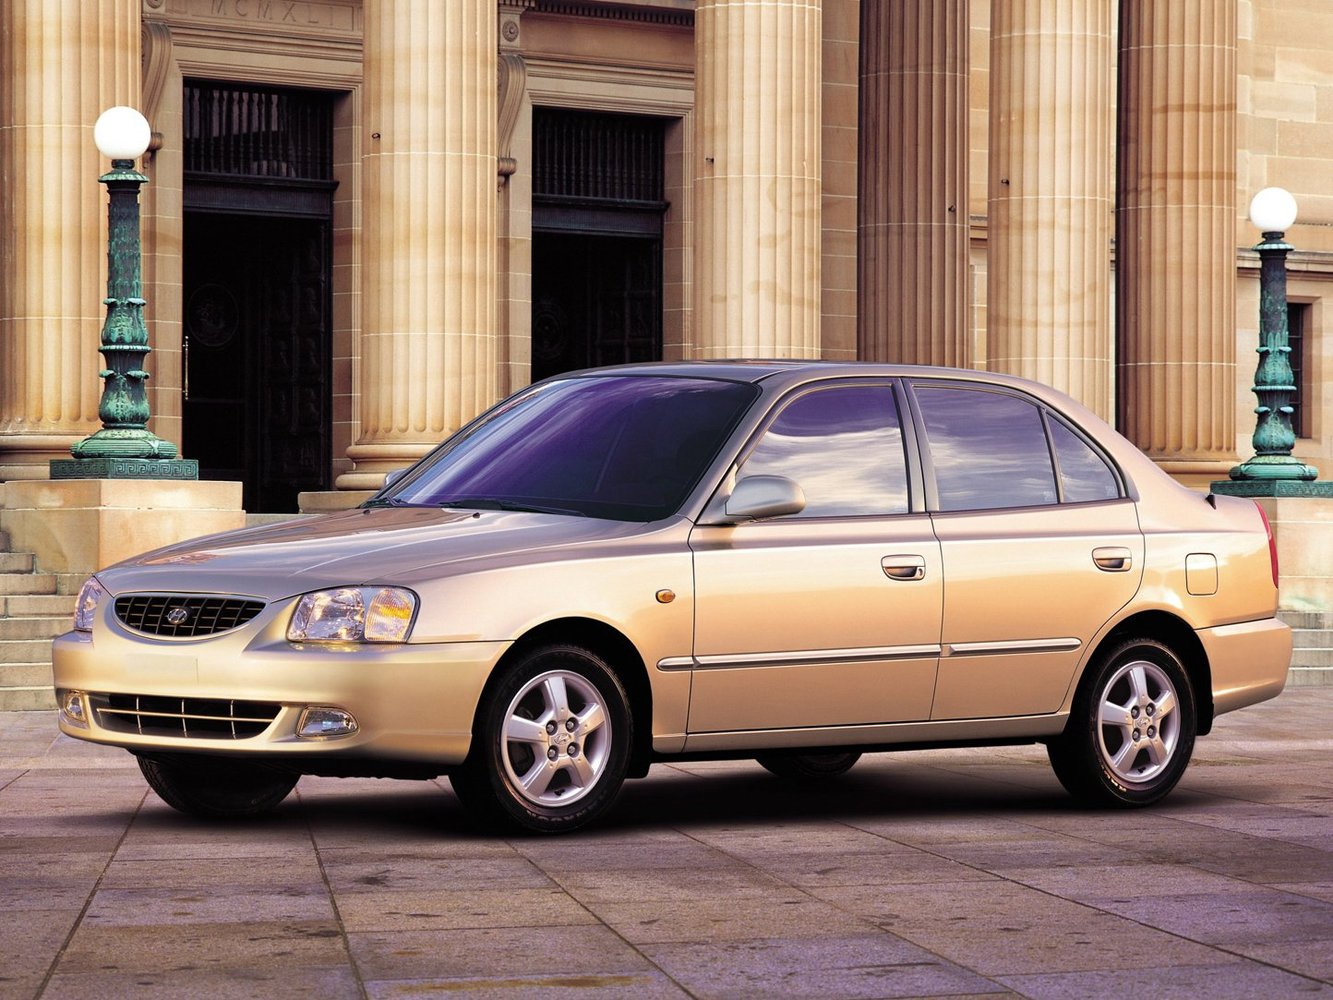 седан Hyundai Accent 2000 - 2003г выпуска модификация 1.3 AT (75 л.с.)